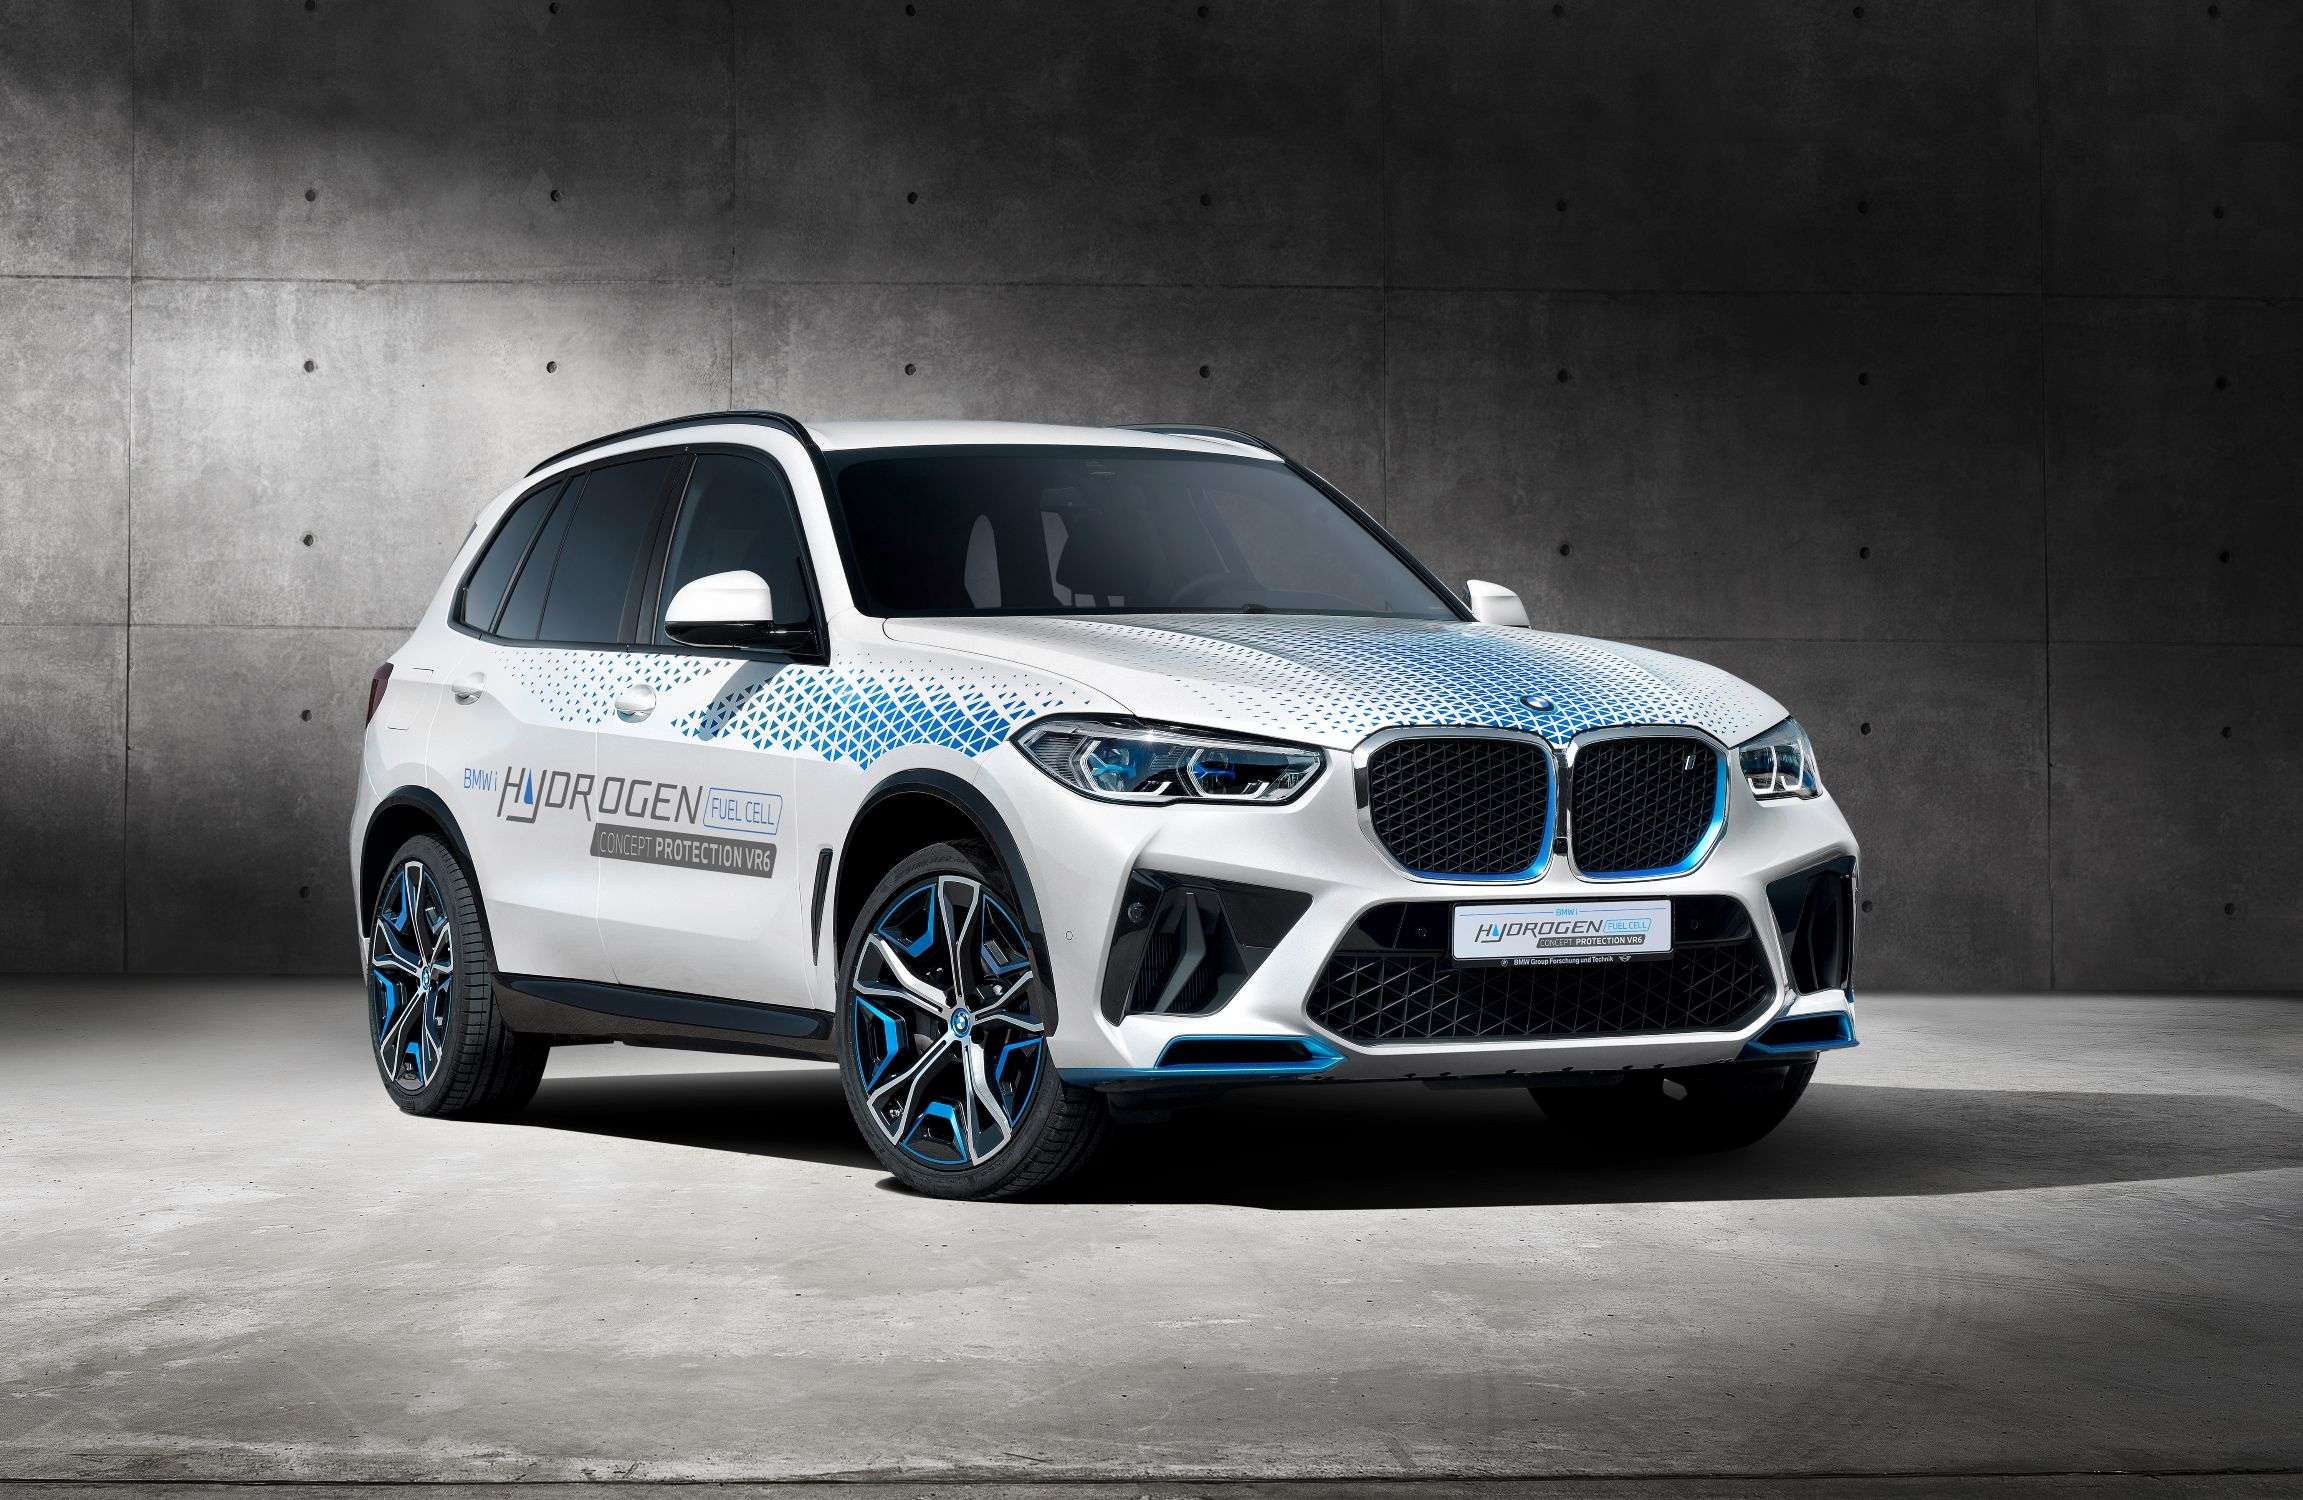 BMW iX5 Hydrogen Protection VR6概念车正式推出